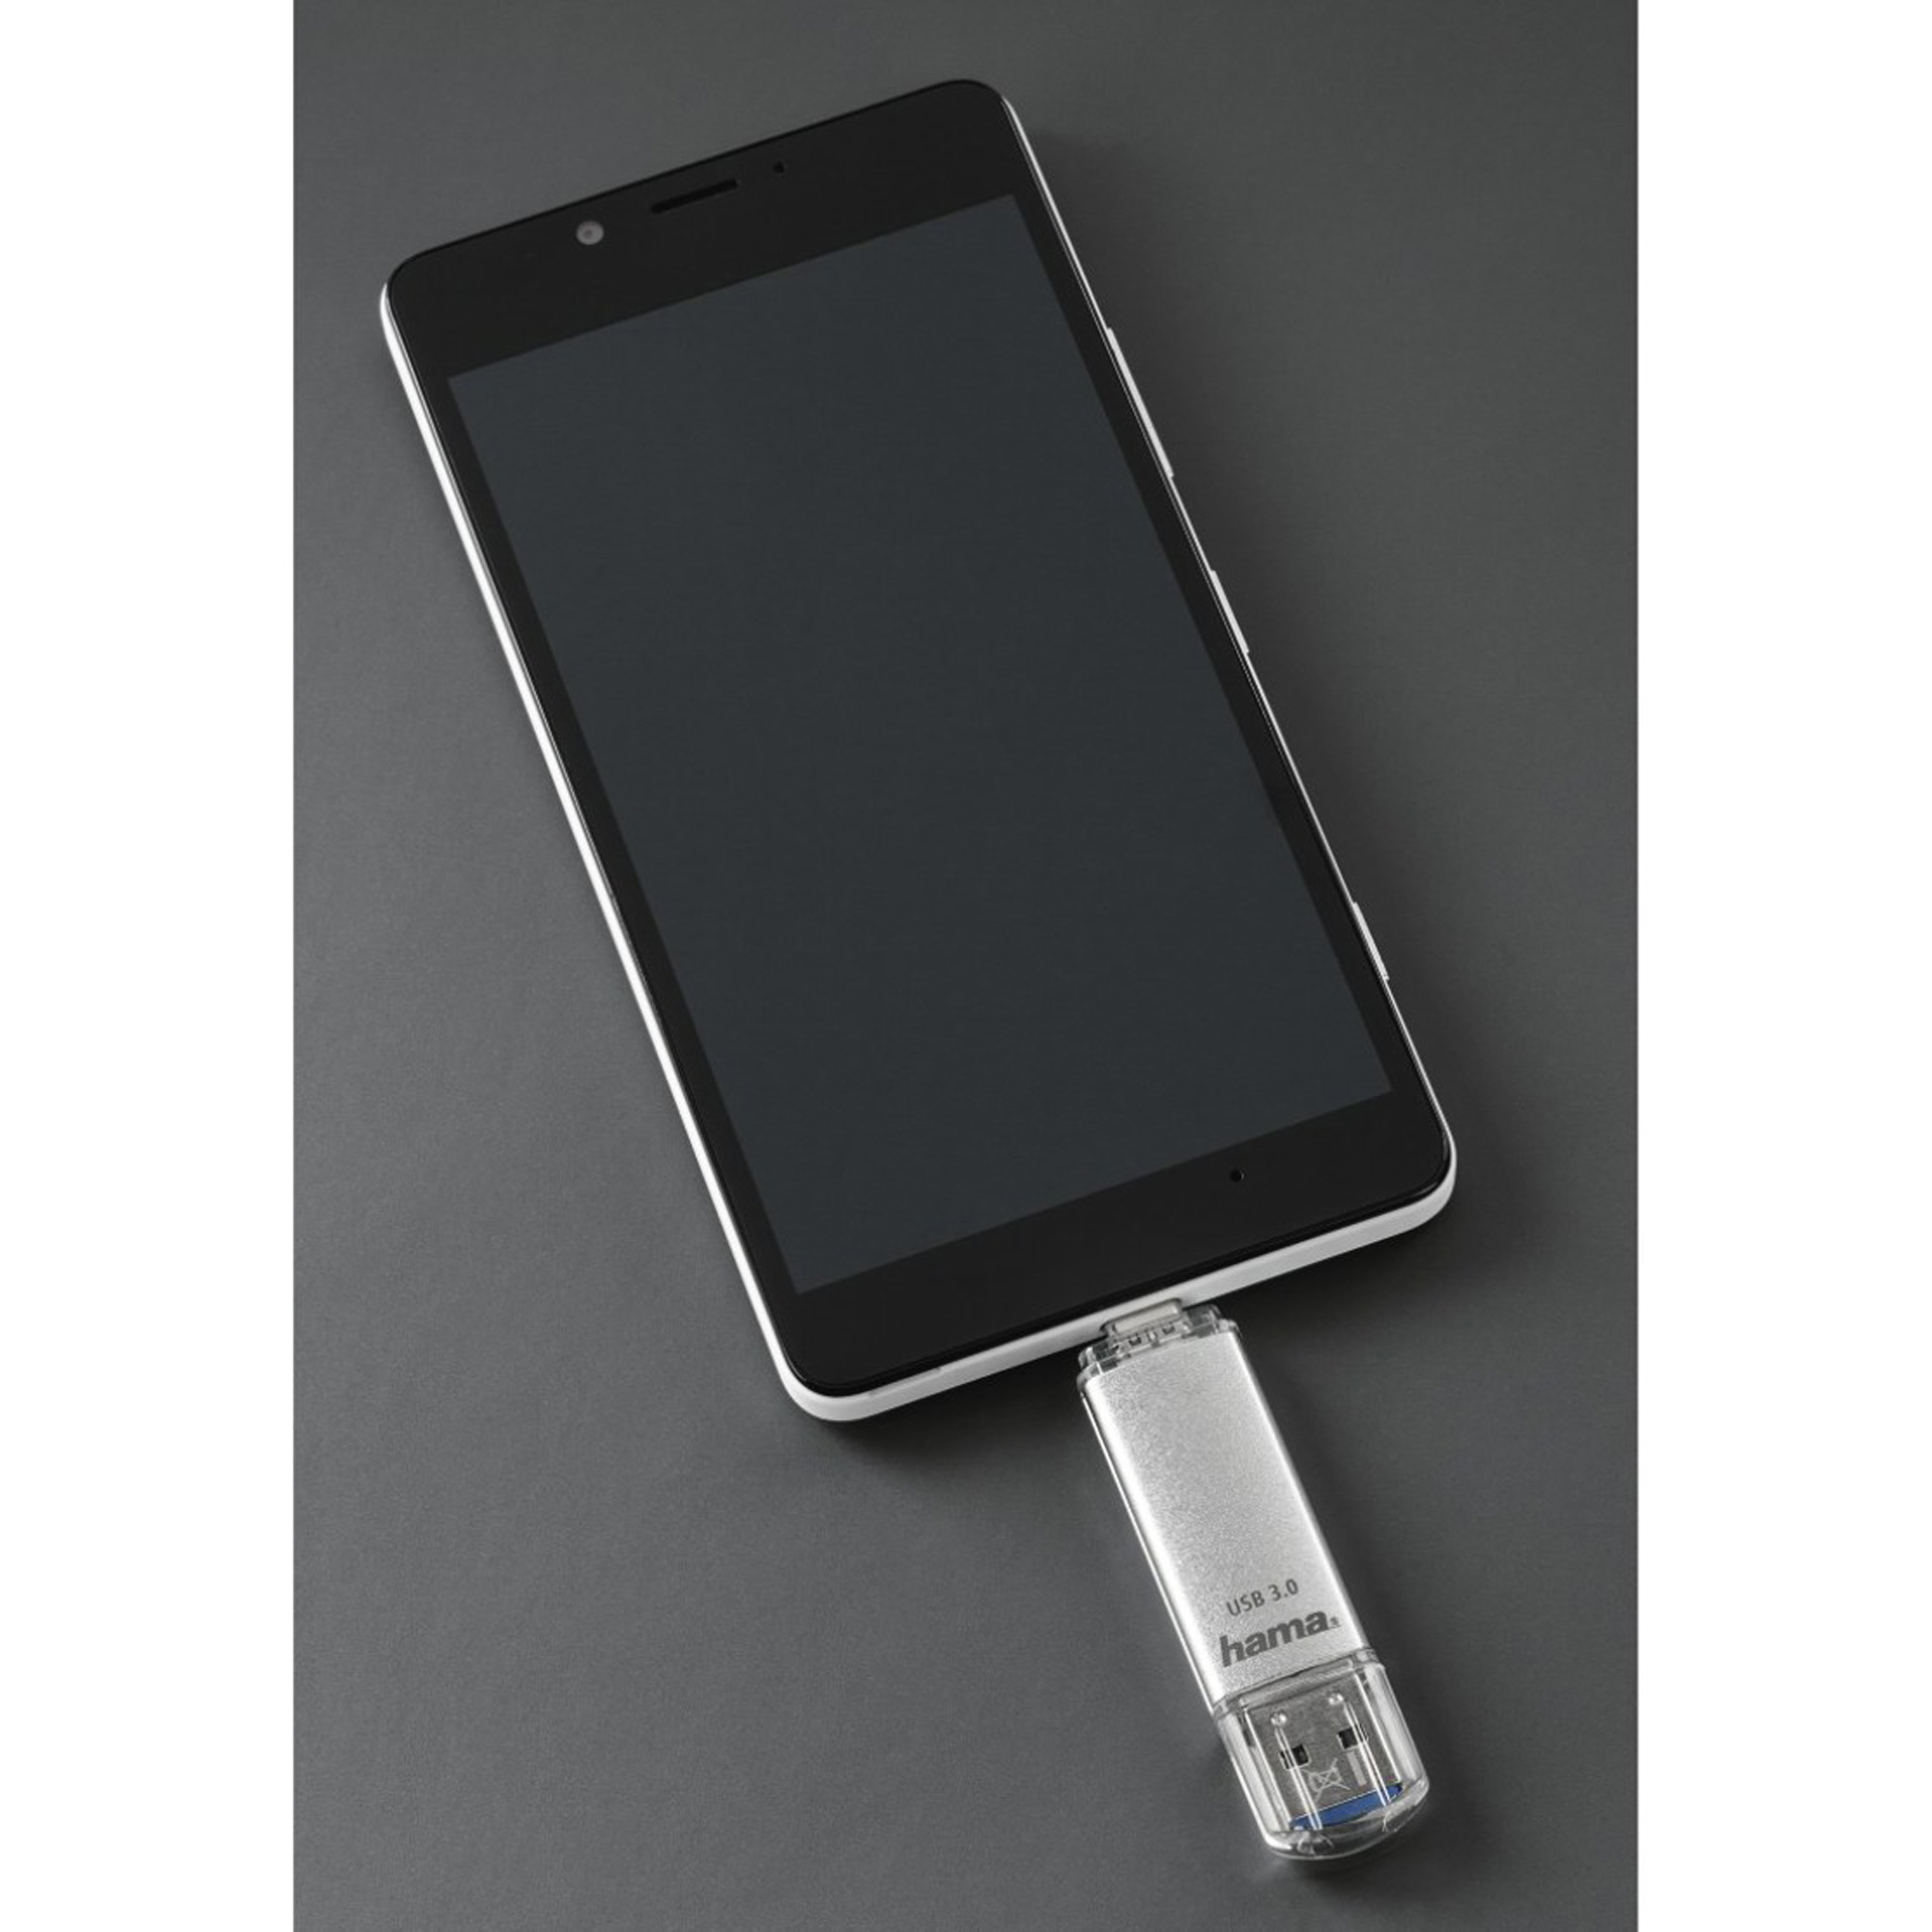 Hama USB Stick C-Laeta USB 3.1, USB 3.0 32 Gbyte